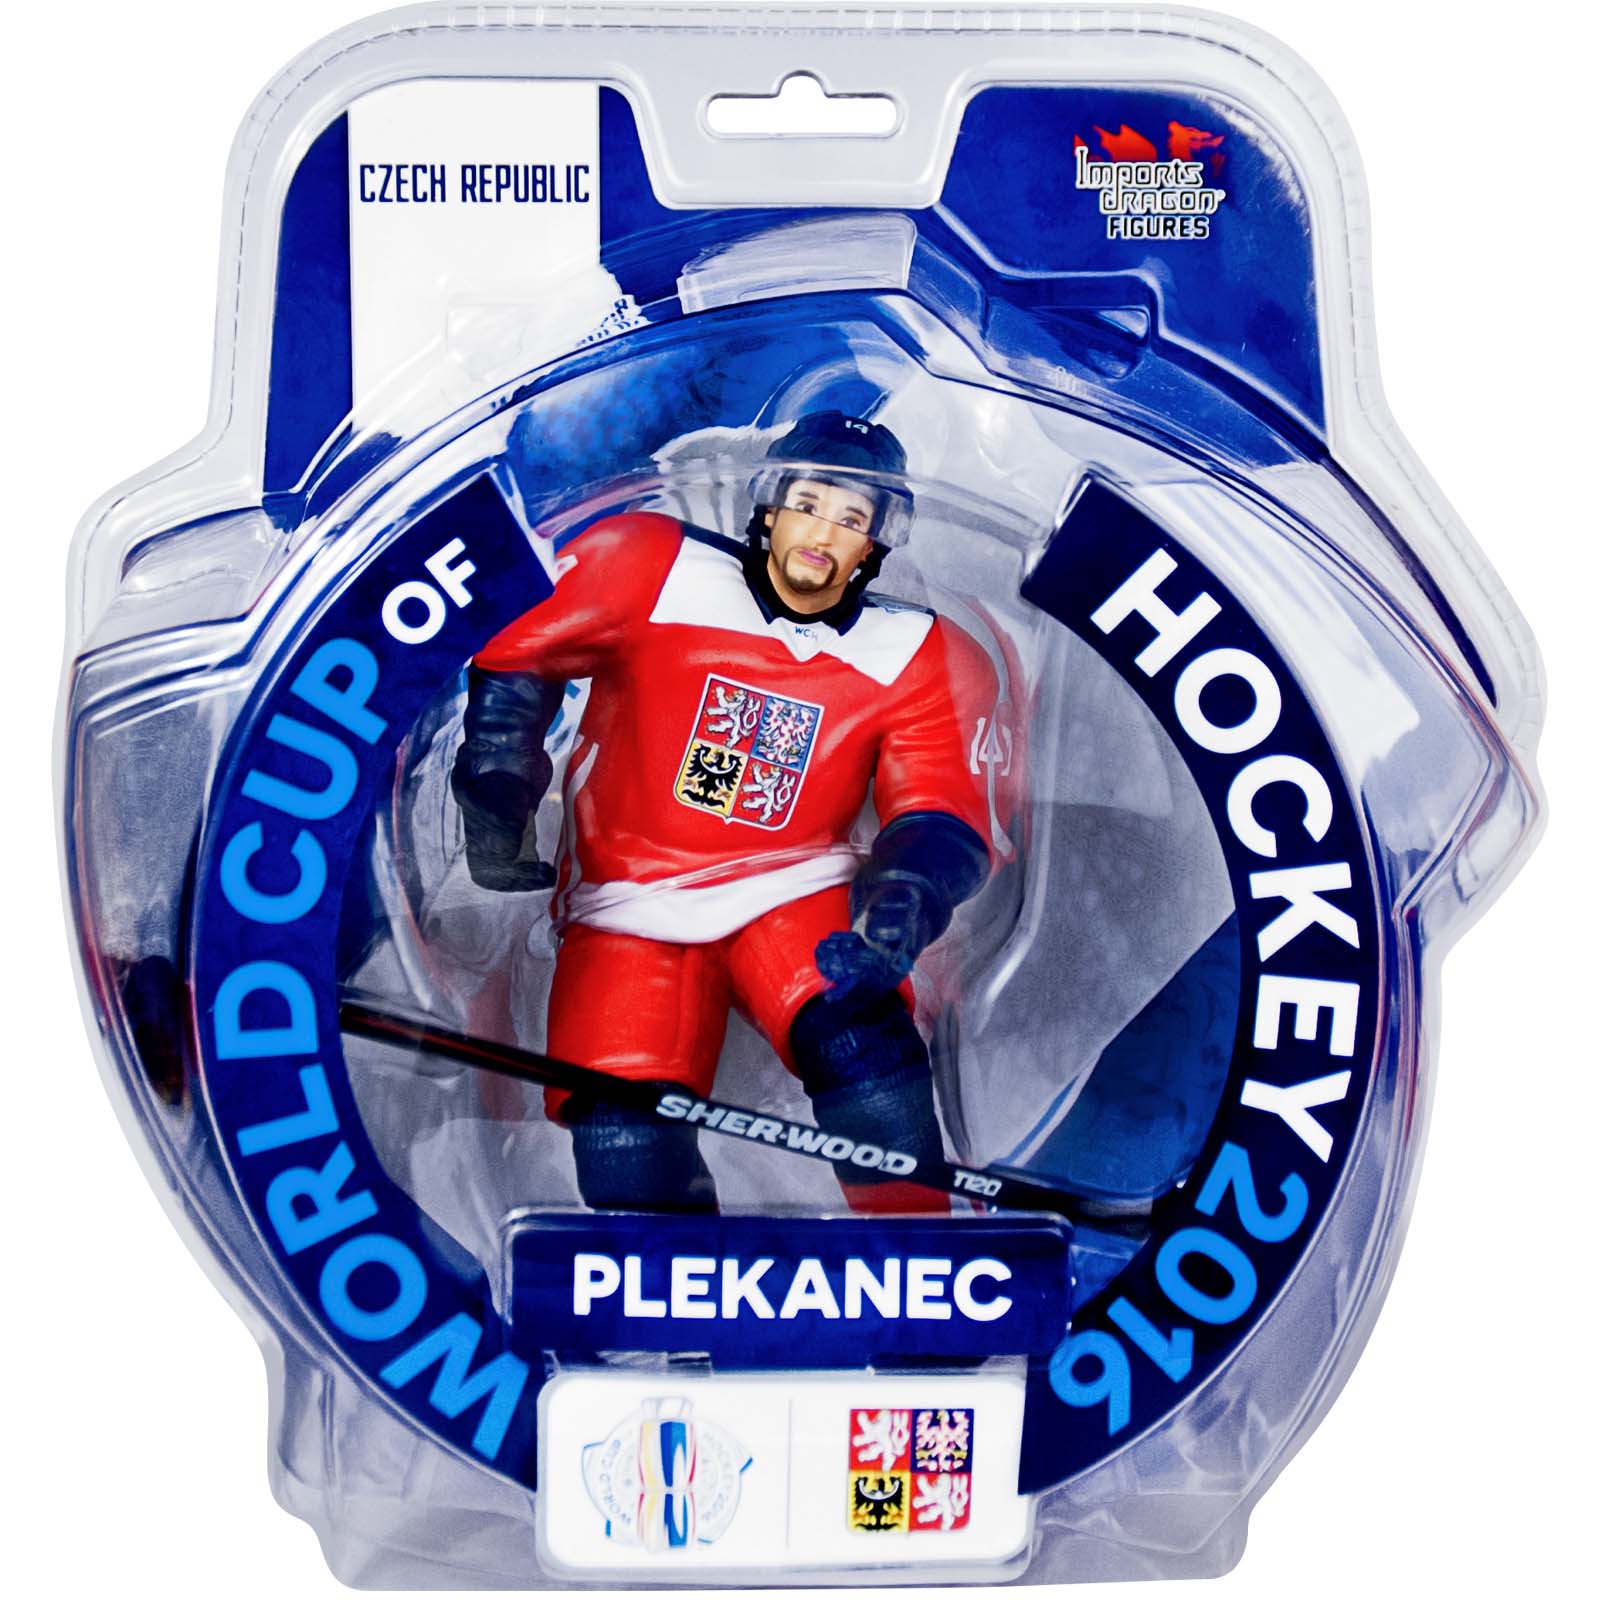 Tomas Plekanec Czech Republic Limited Edition 6 inch Figurine - BigBoi Cards